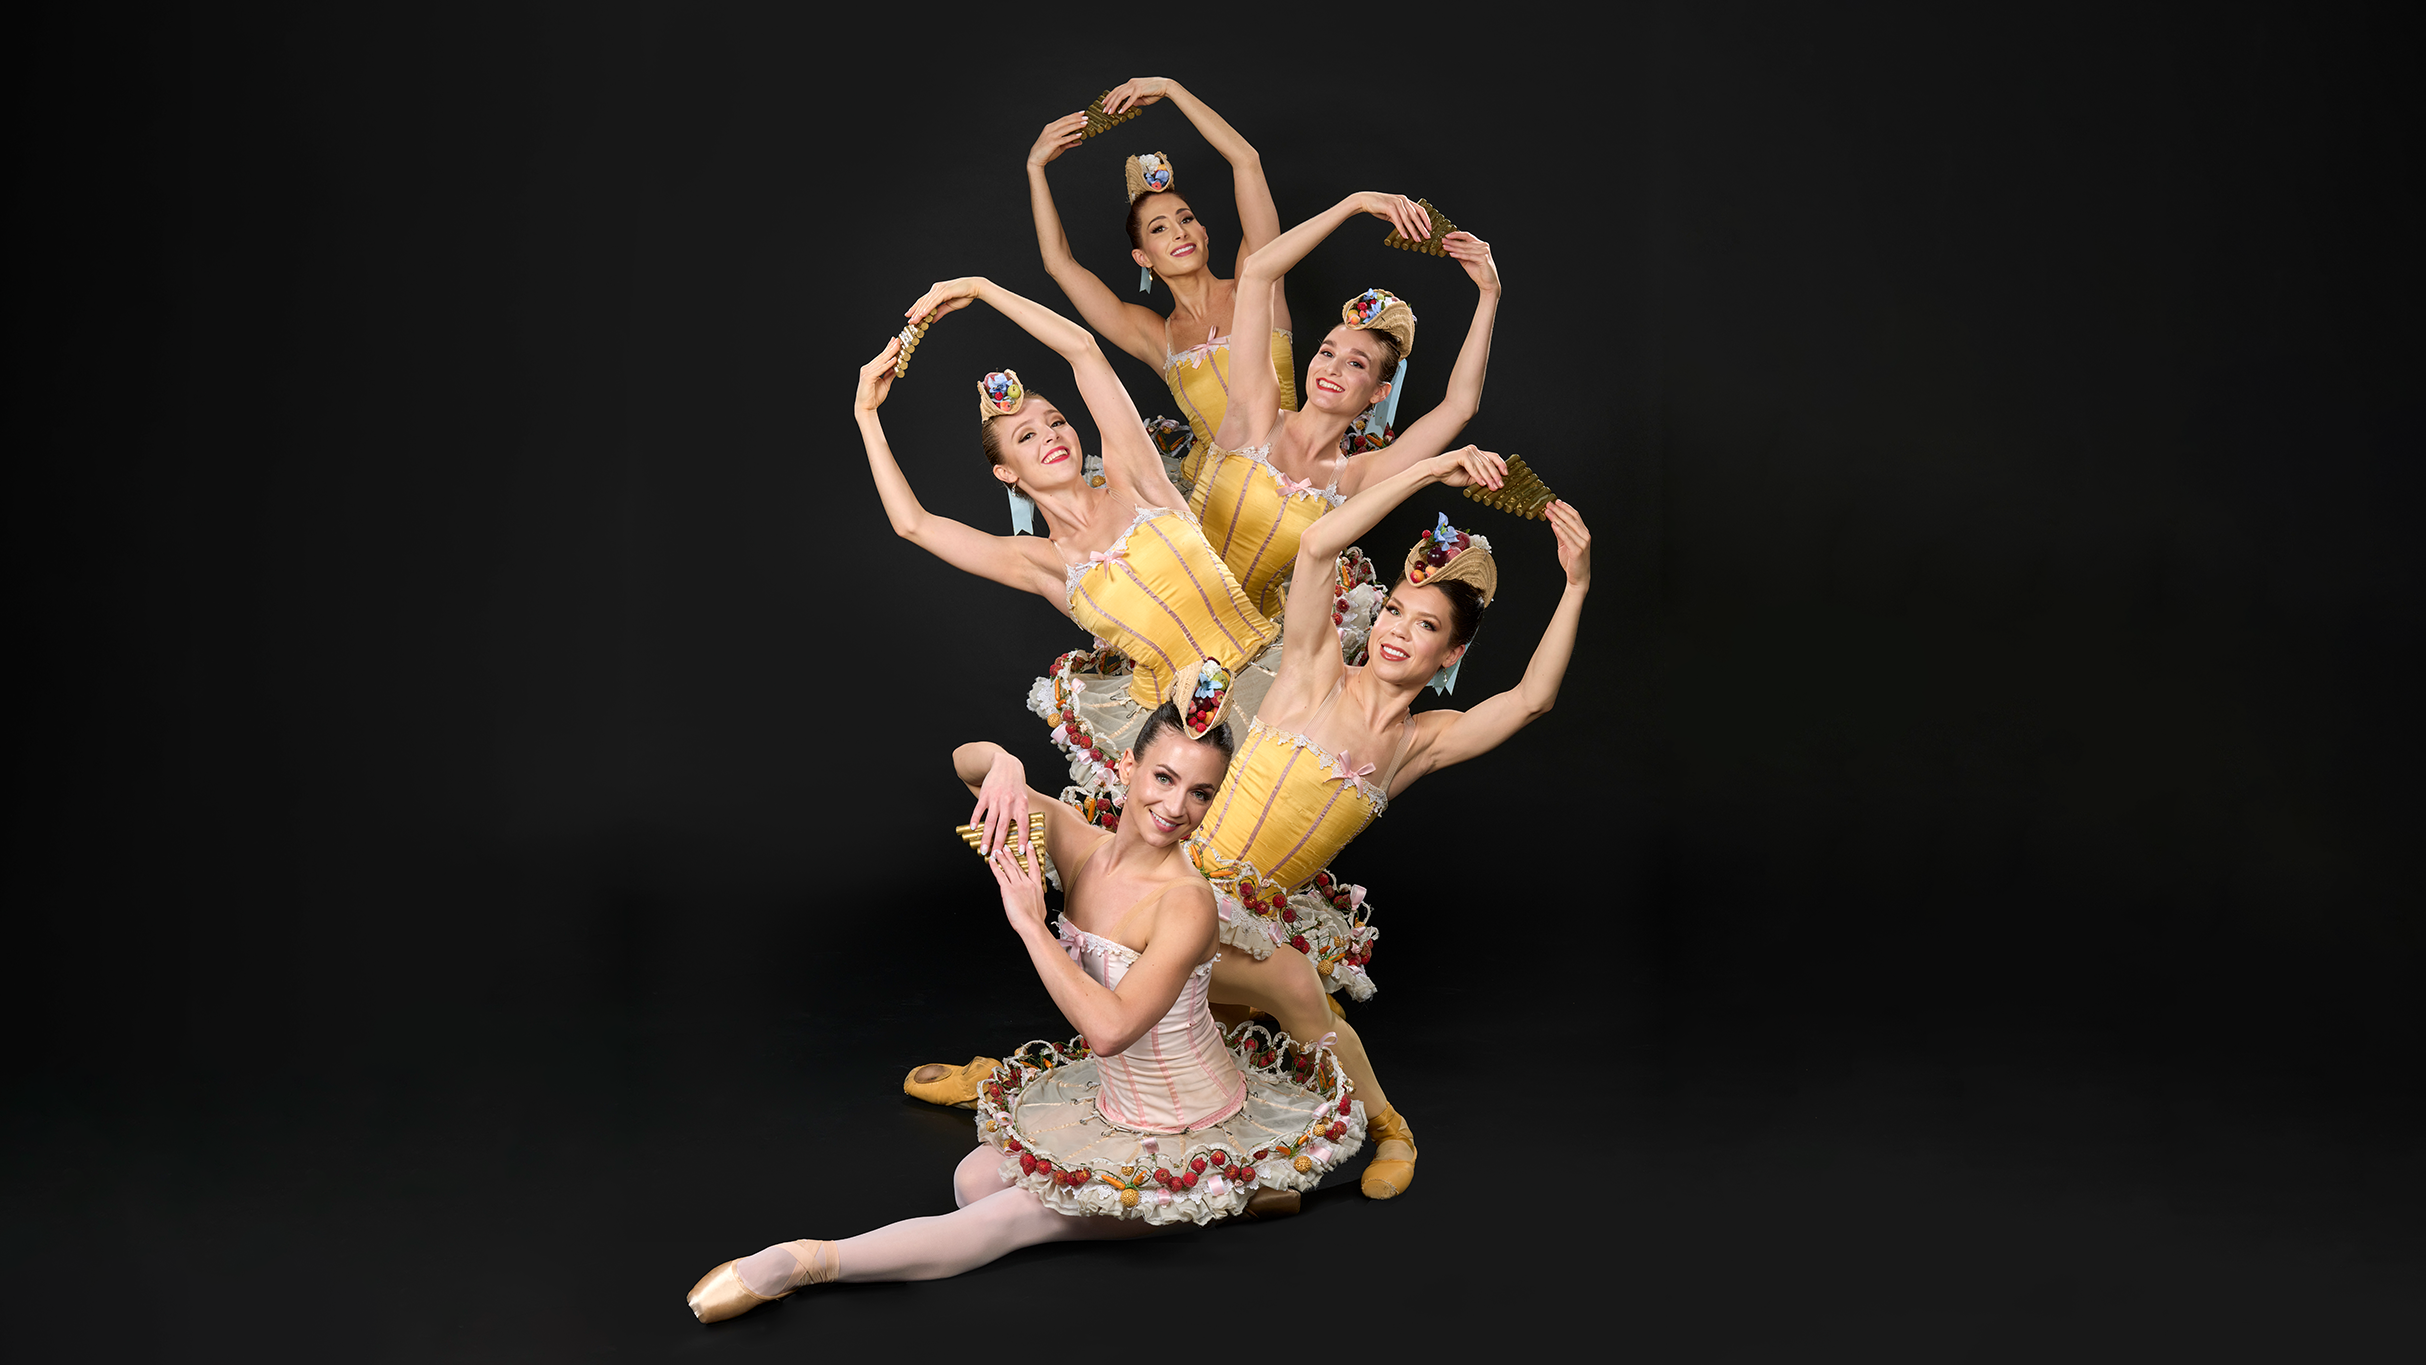 Alabama Ballet Presents George Balanchine's The Nutcracker® in Birmingham promo photo for Exclusive presale offer code